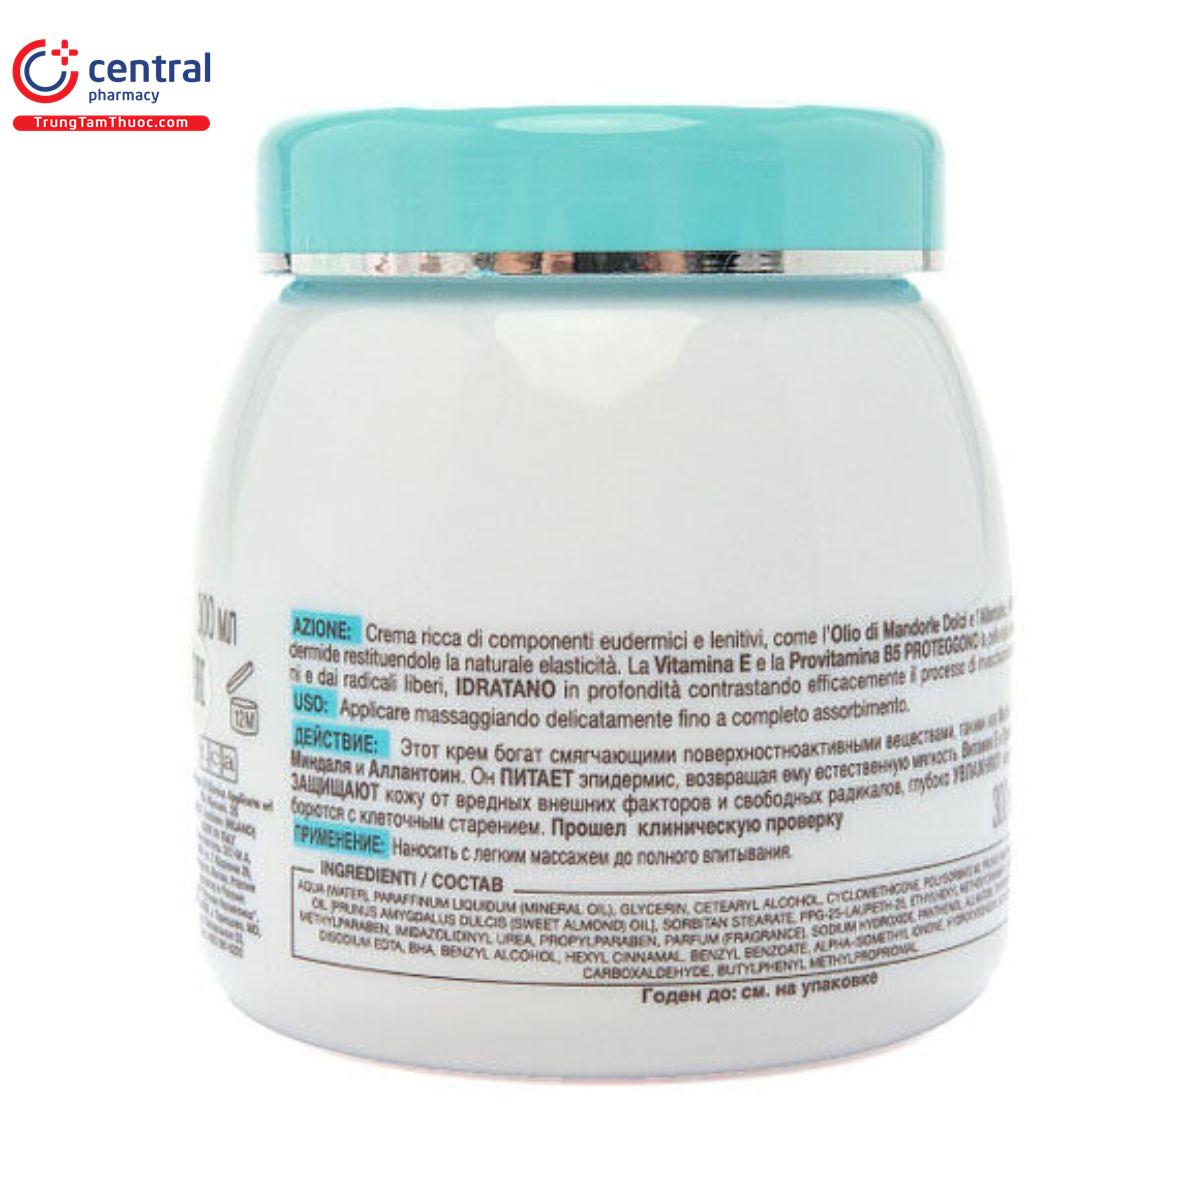 cliven crema polivalente multipurpose cream 5 N5036